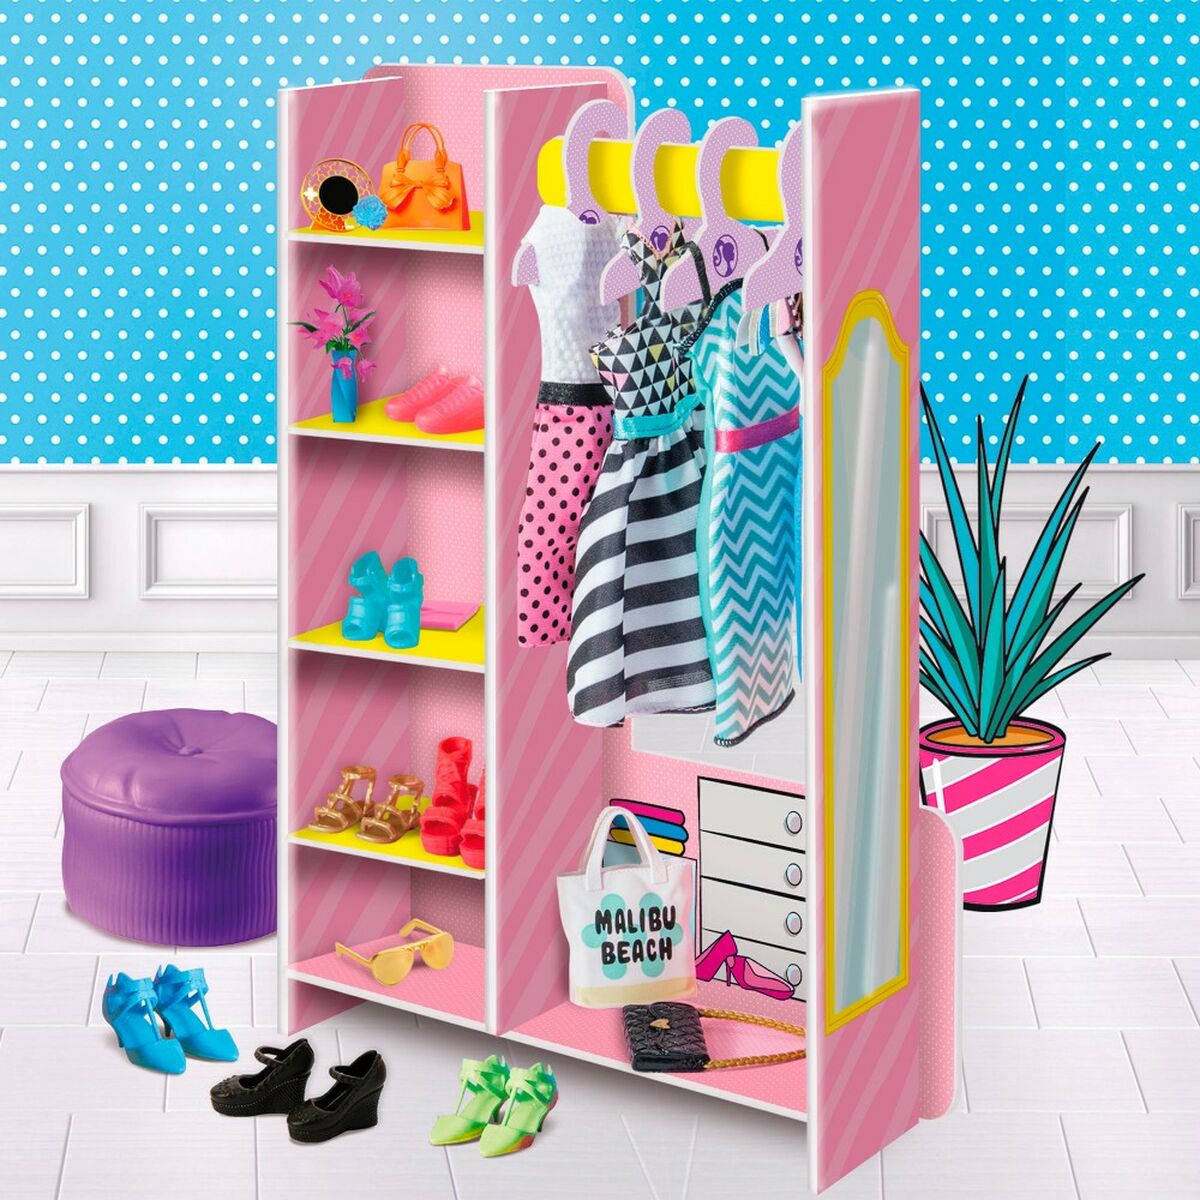 Playset Barbie Fashion Boutique 9 Delar 6,5 x 29,5 x 3,5 cm-Leksaker och spel, Dockor och actionfigurer-Barbie-peaceofhome.se